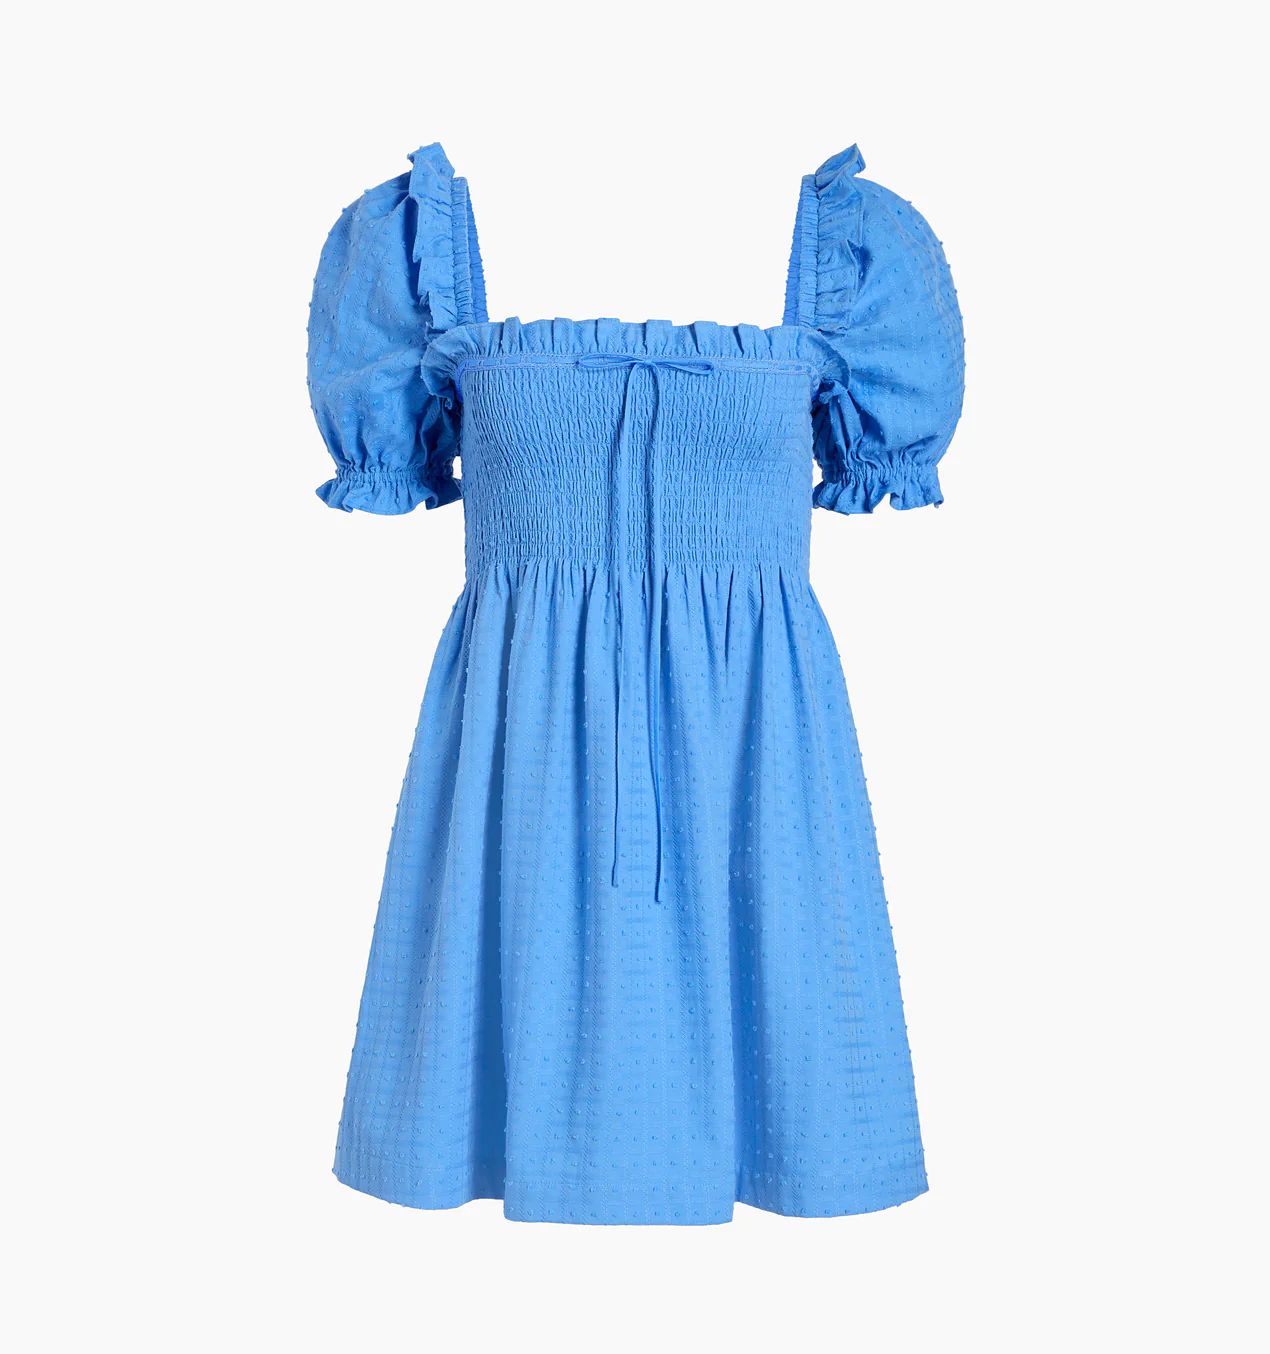 The Scarlett Mini Nap Dress - Hydrangea Blue Textured Clip Dot | Hill House Home